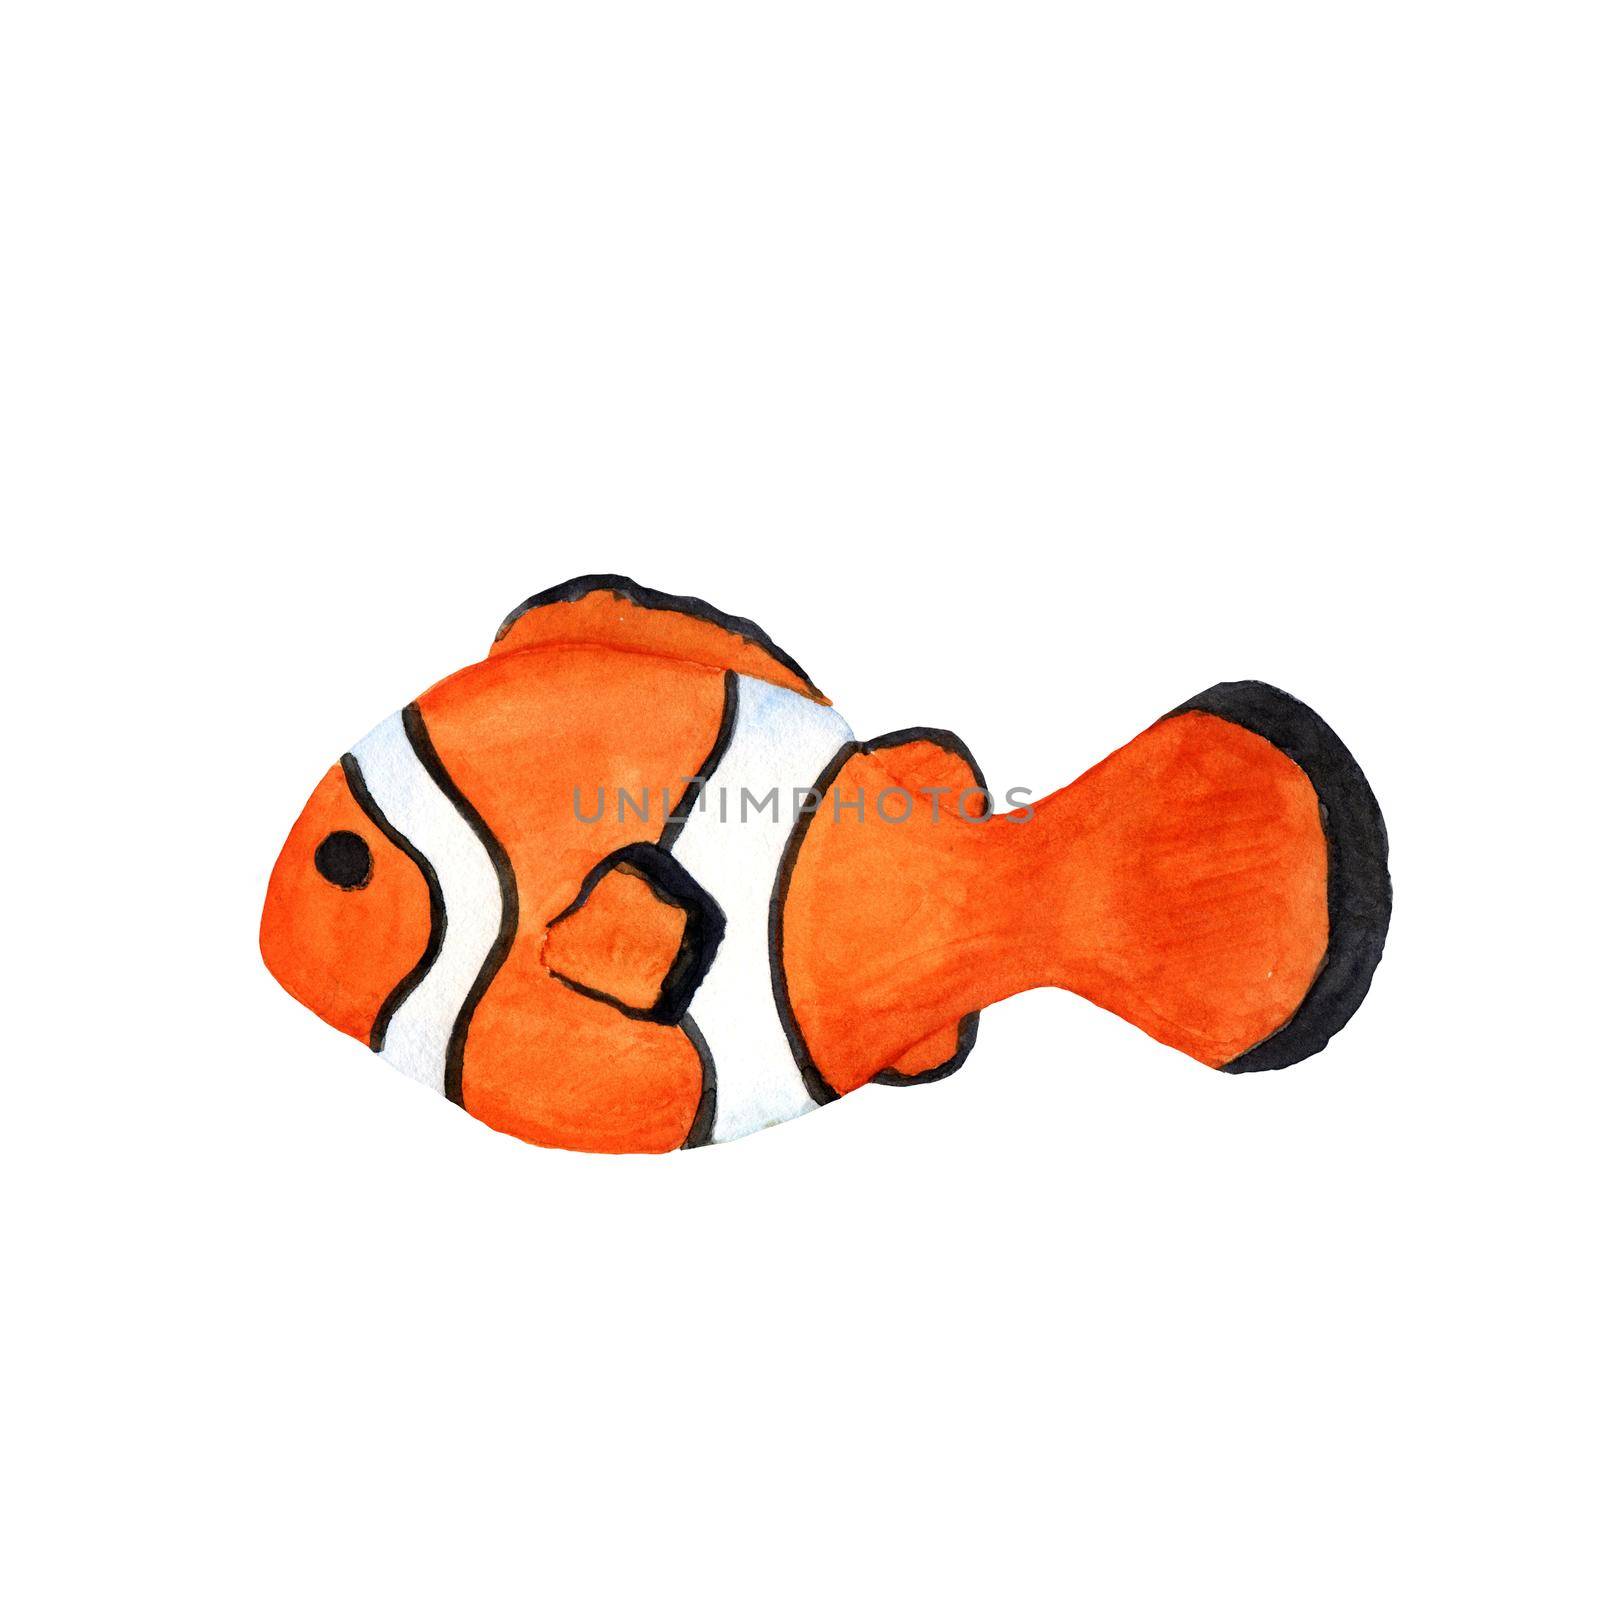 Watercolor illustration cute clownfish. Illustration orange fish isolated on white background. Sea animal for kids